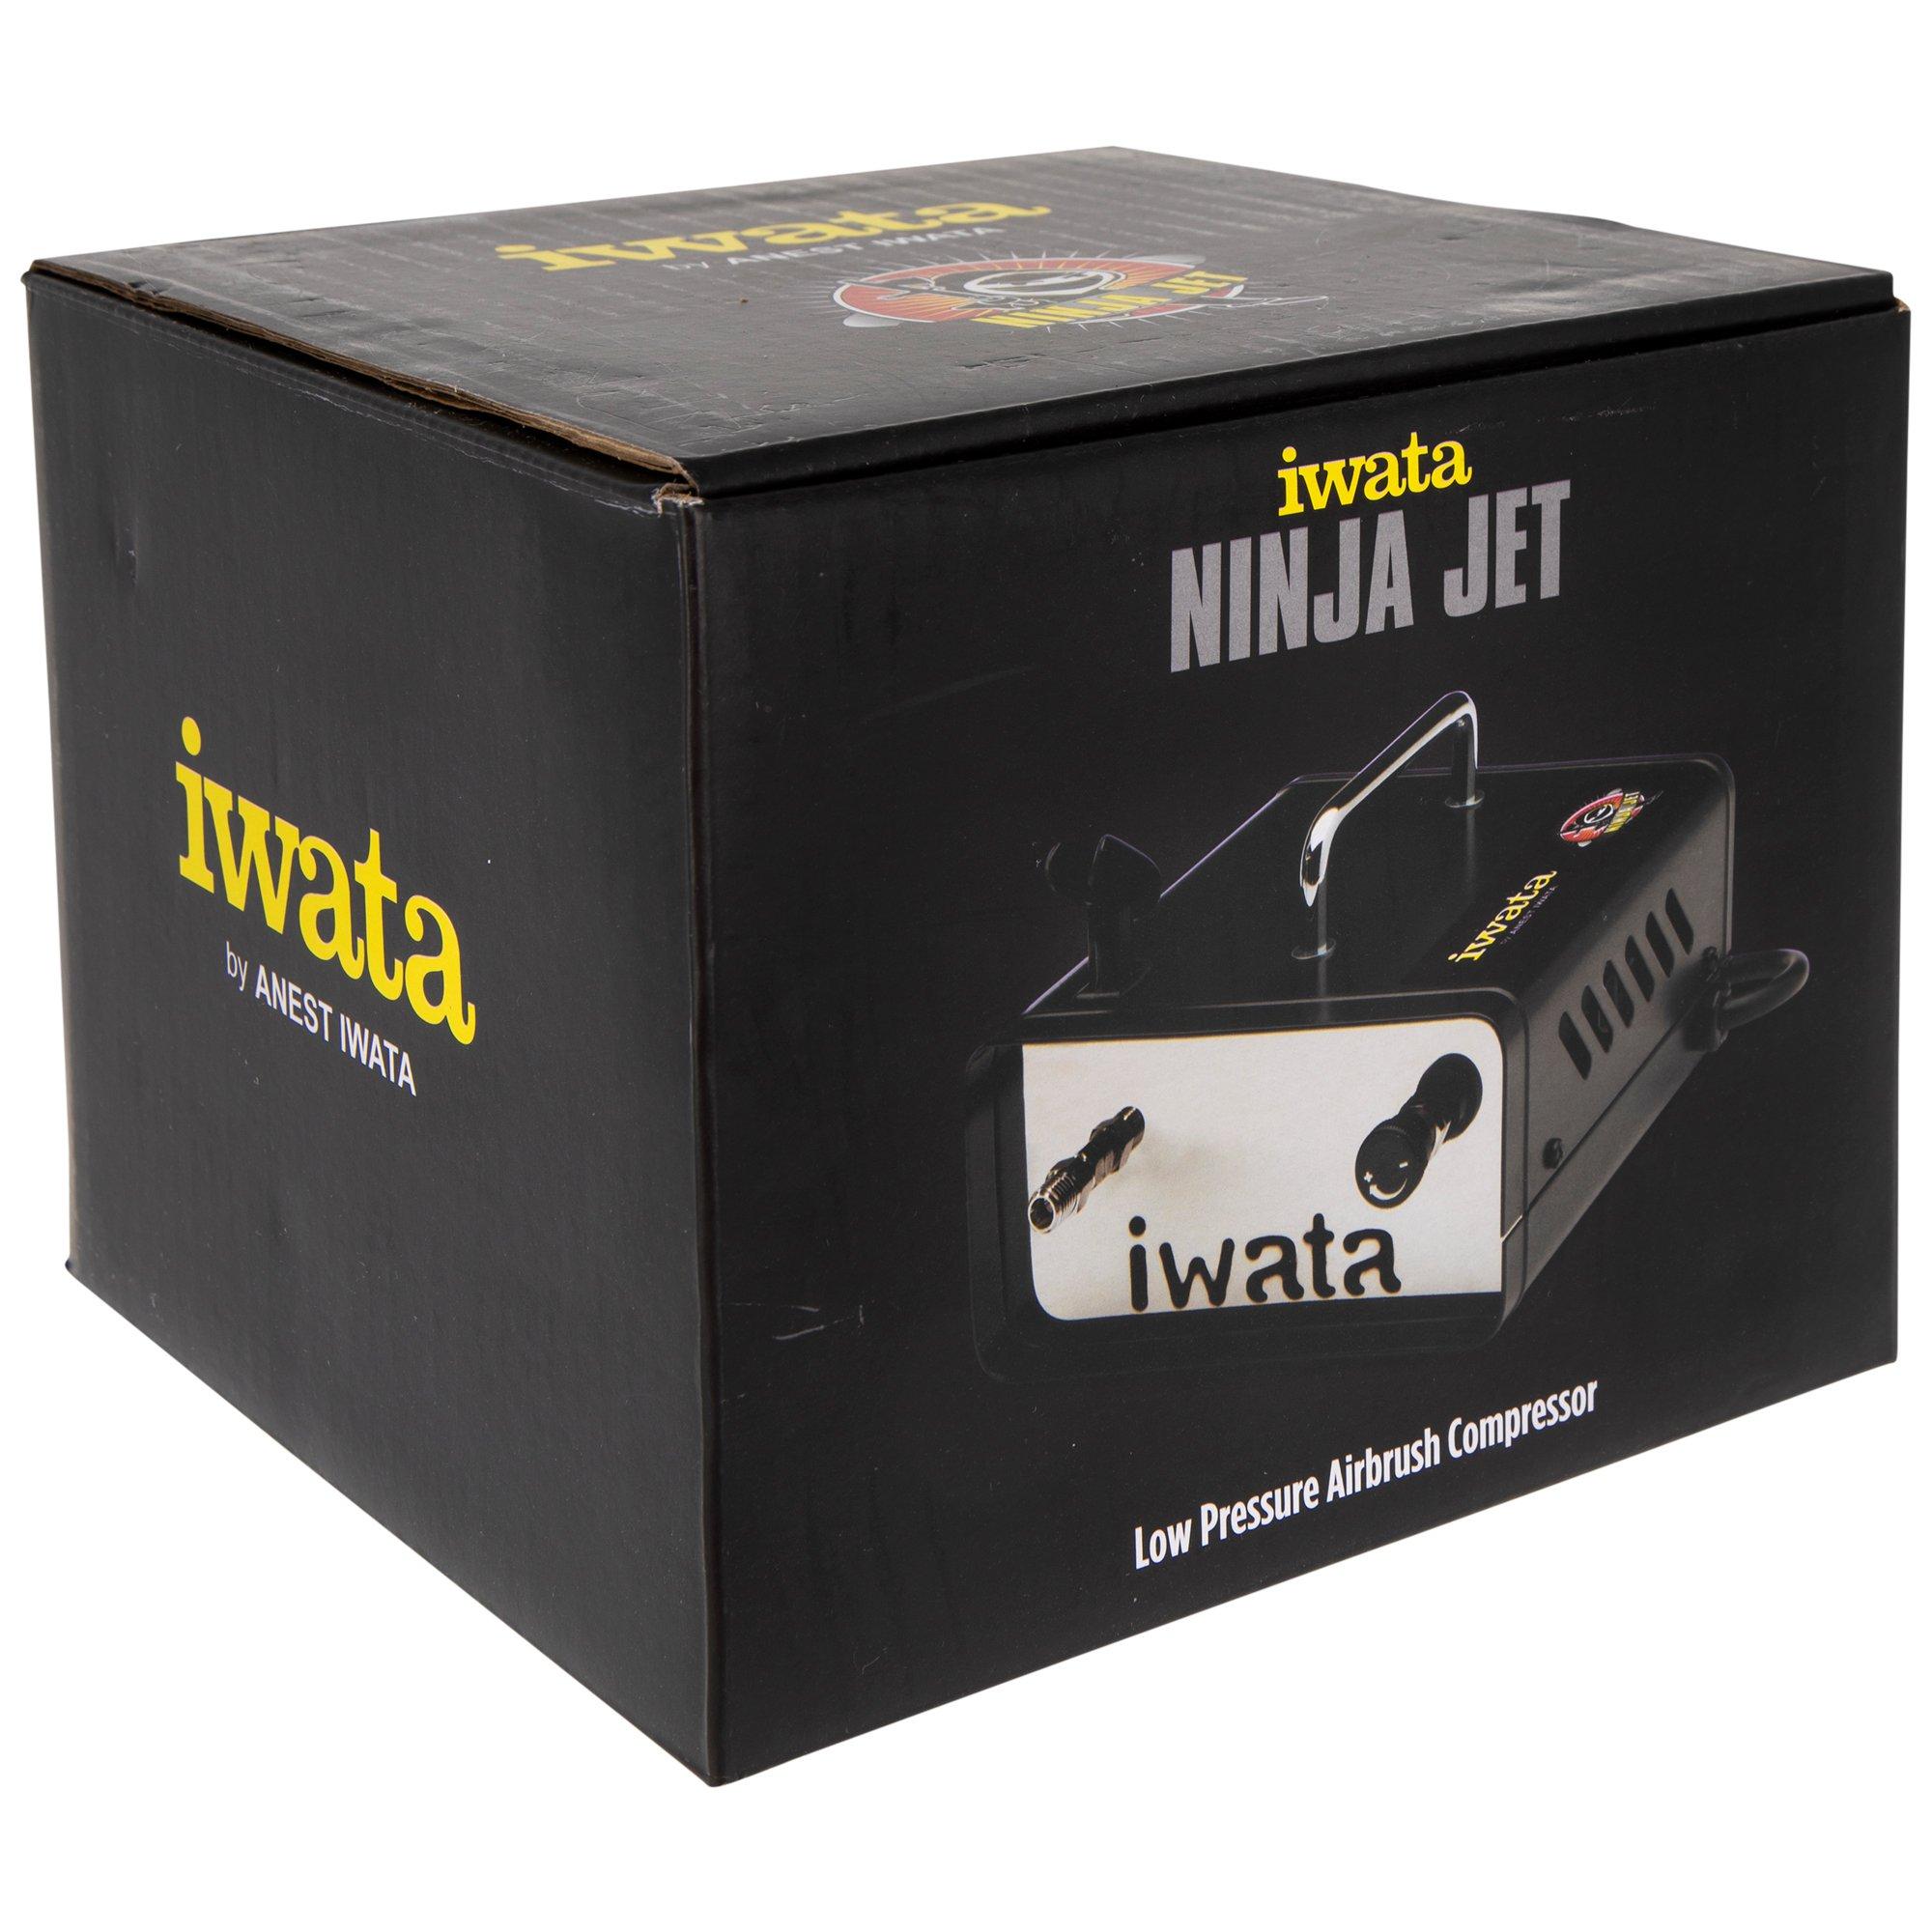 Iwata Neo BCN Beginners Airbrush Kit, Model IW126 